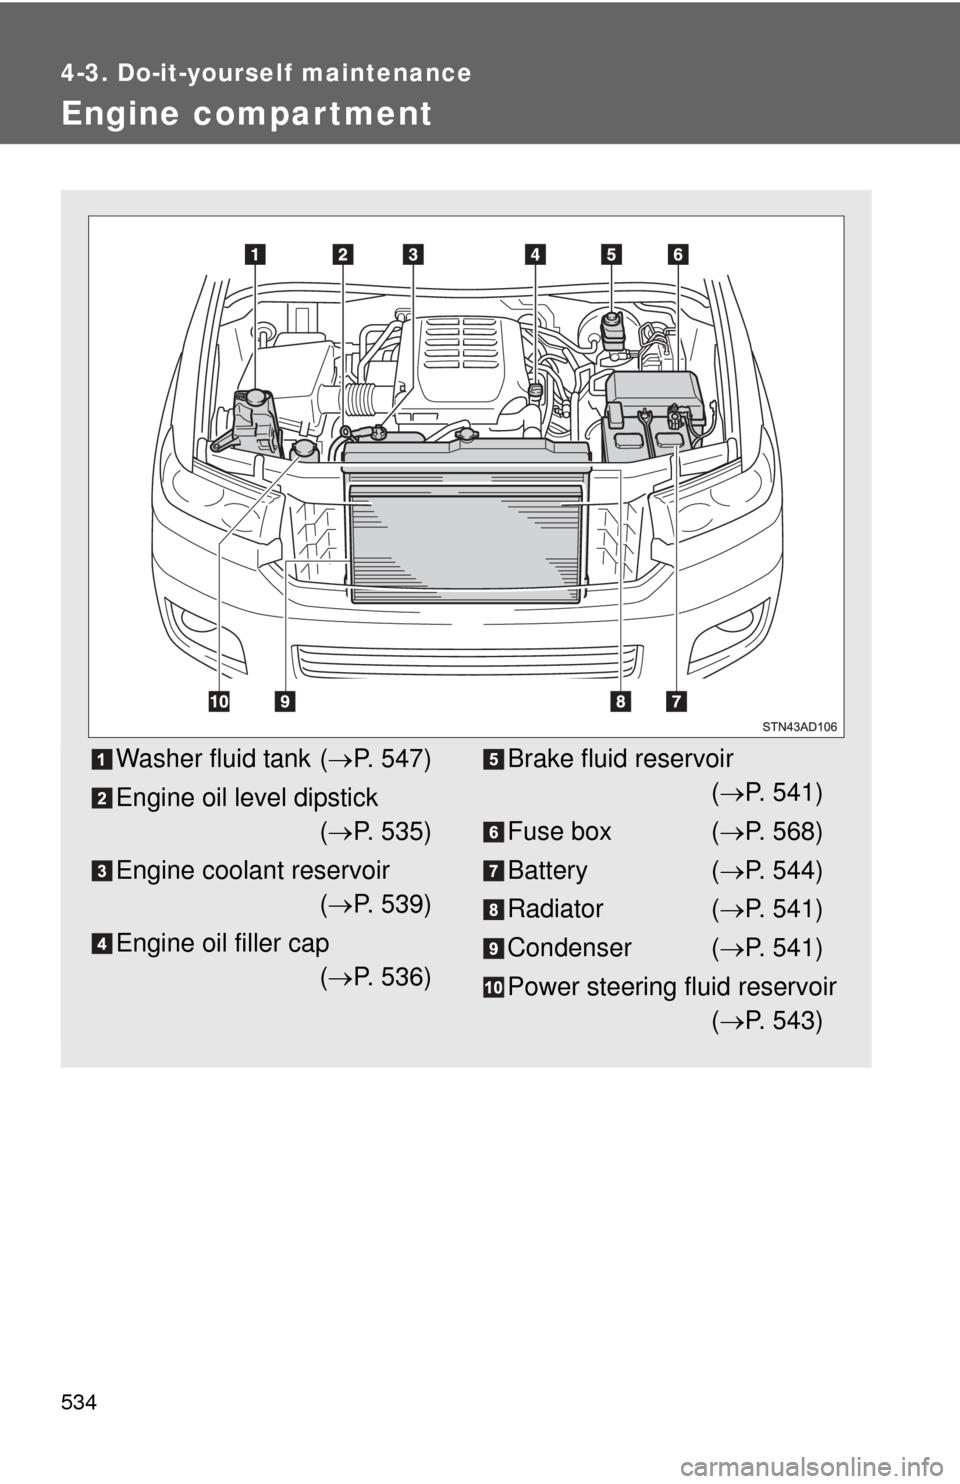 TOYOTA SEQUOIA 2012 2.G Owners Manual 534
4-3. Do-it-yourself maintenance
Engine compar tment
Washer fluid tank (P. 547)
Engine oil level dipstick ( P. 535)
Engine coolant reservoir ( P. 539)
Engine oil filler cap ( P. 536)Bra